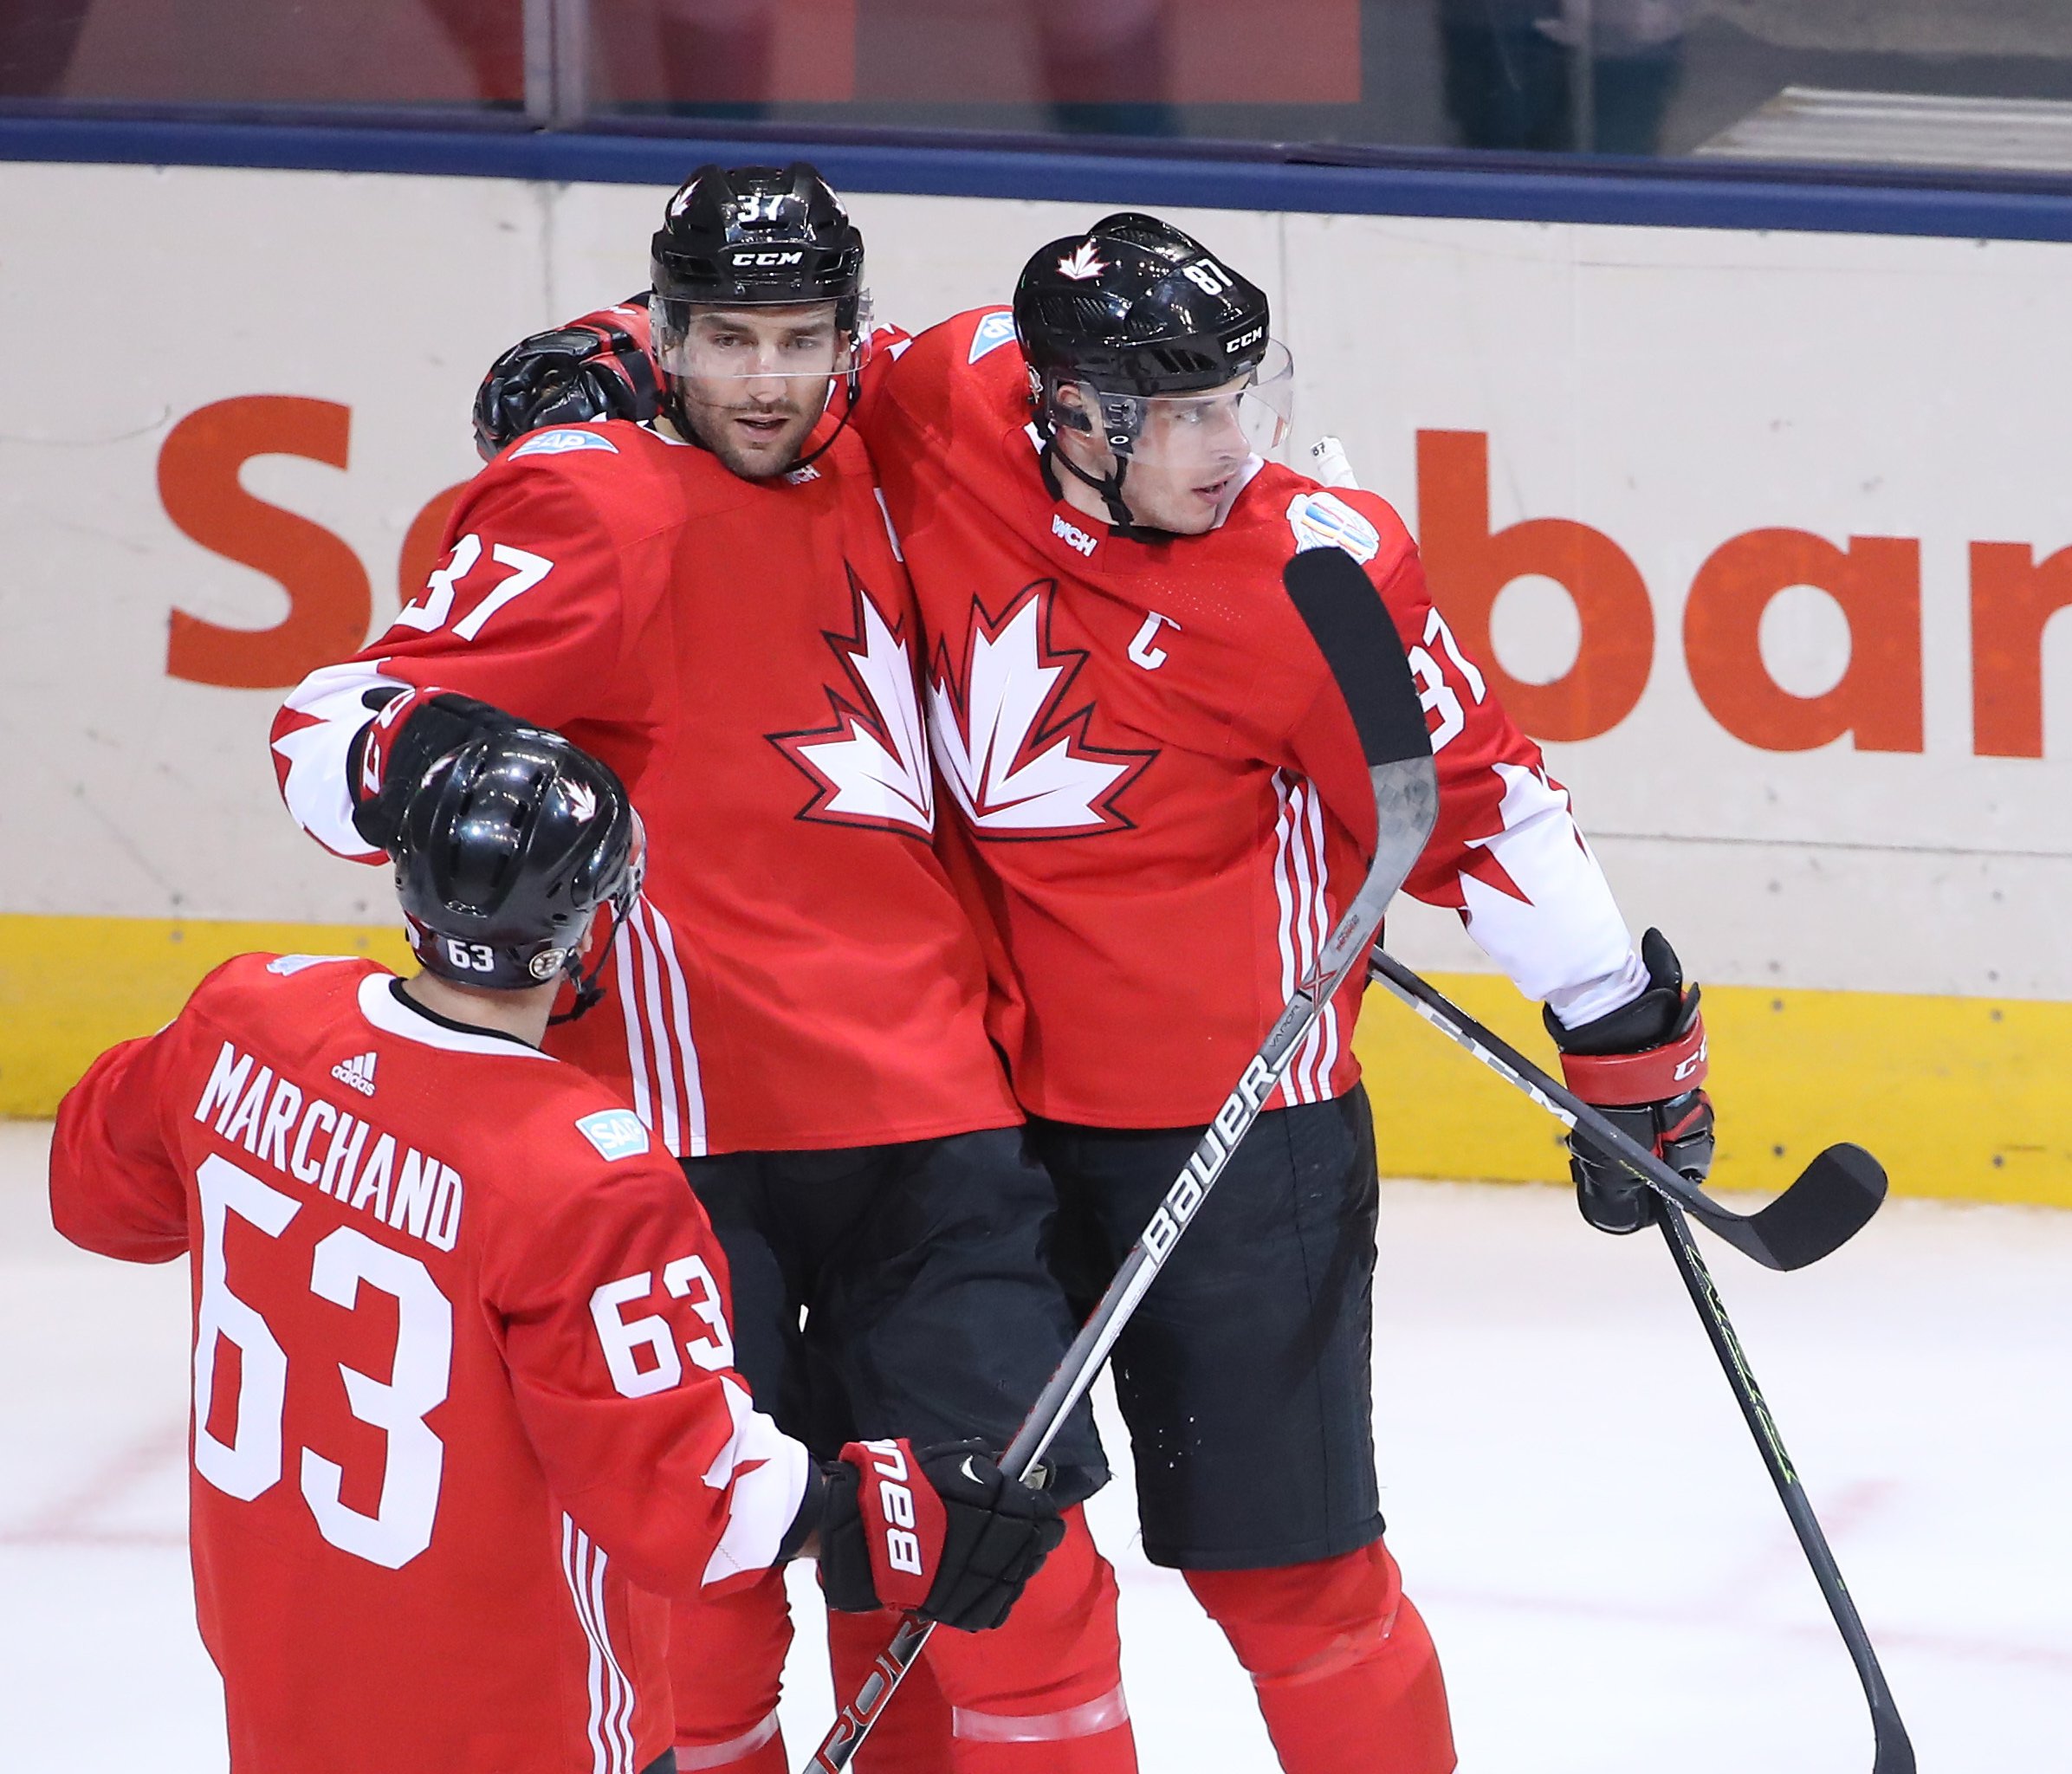 Thomas Chabot Named Captain of Canada's Men's World Championship